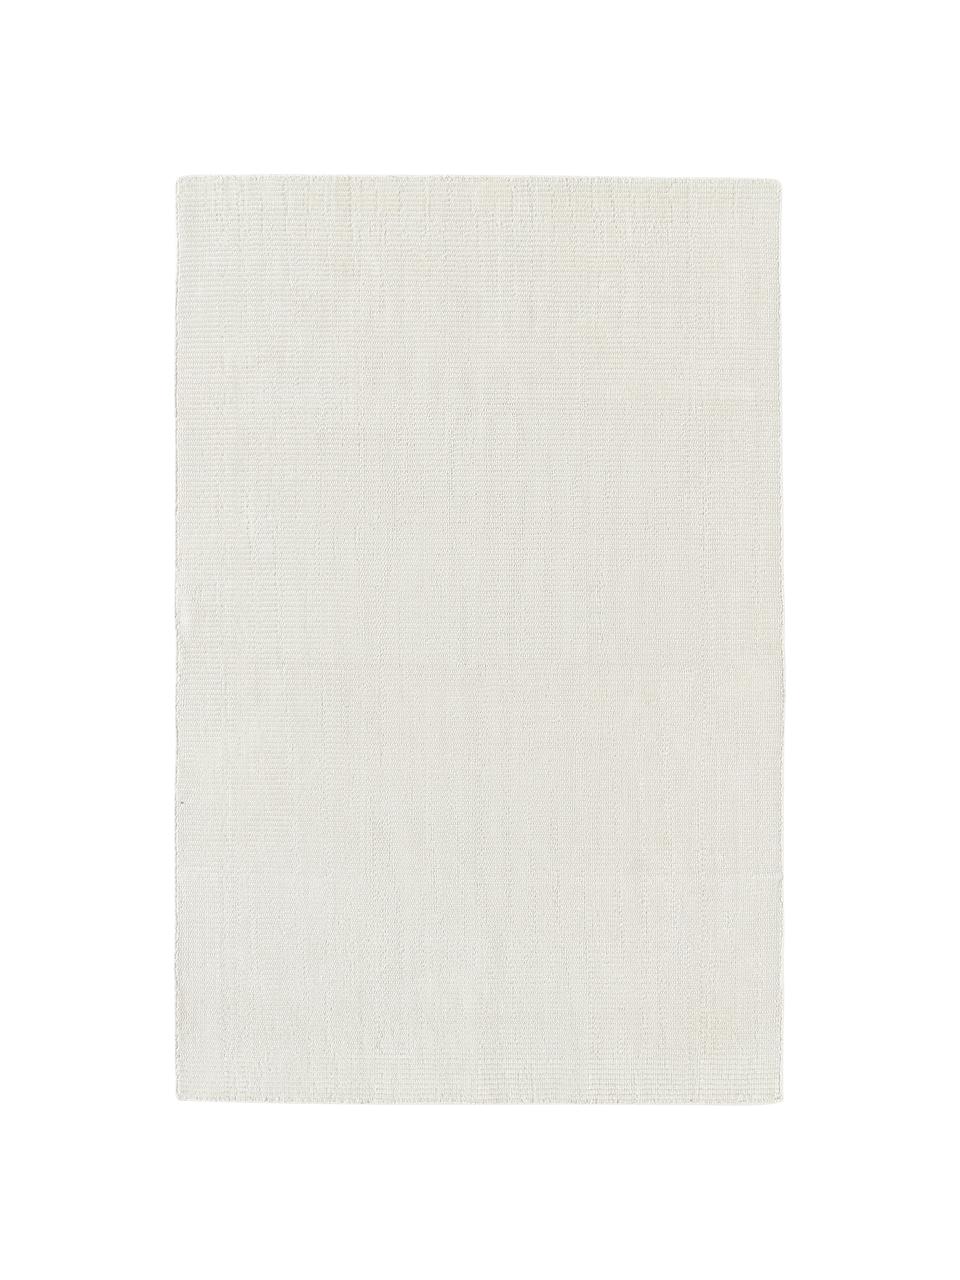 Alfombra artesanal de pelo corto Willow, 100% poliéster con certificado GRS, Blanco crema, An 120 x L 180 cm (Tamaño S)